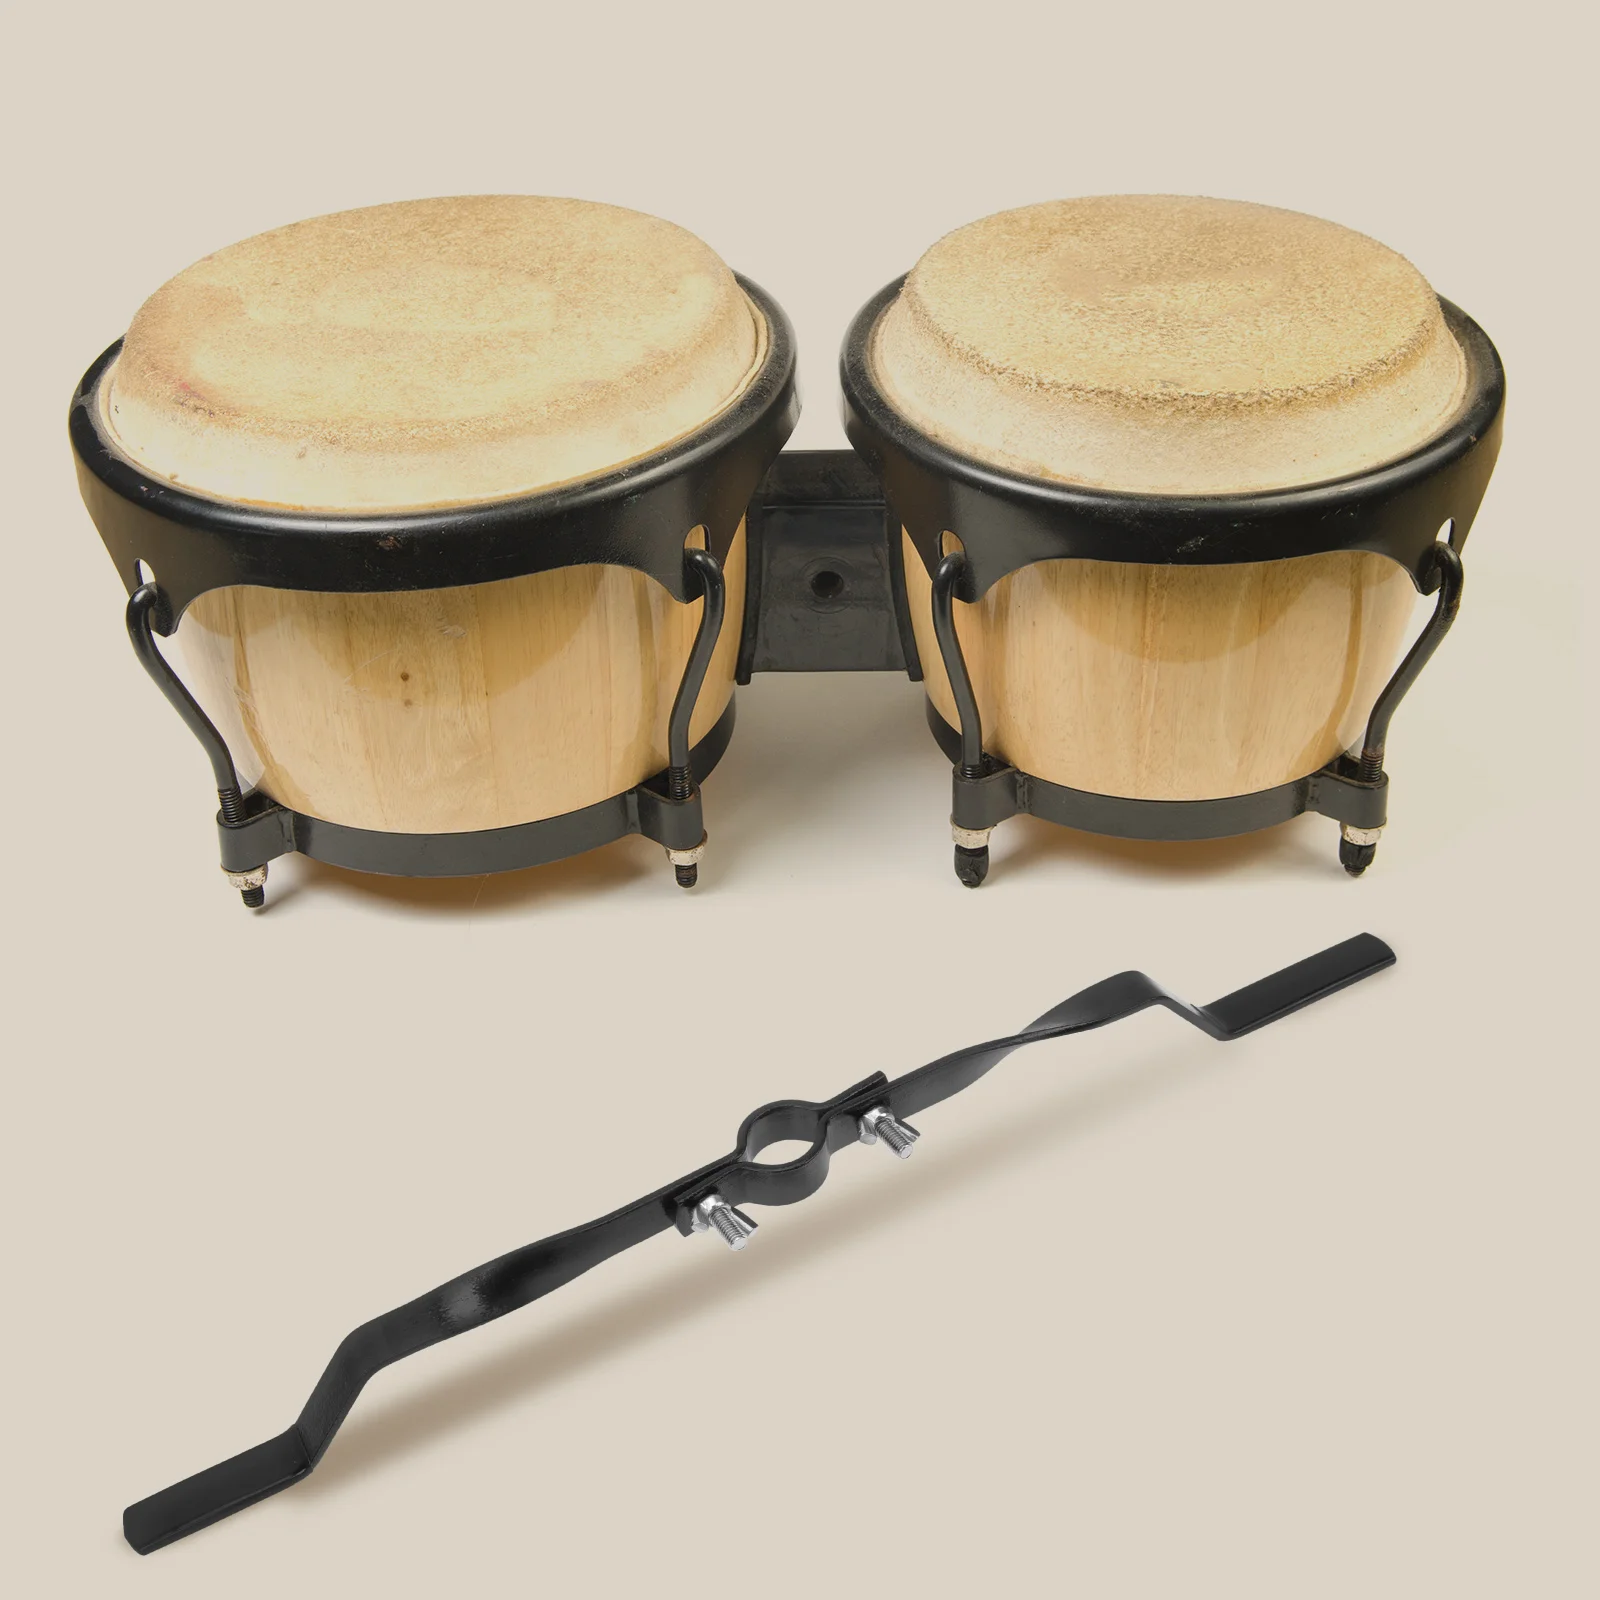 Bongo Drum Stick Tool Trays Bracket Accessories Drum Stand Supplies Iron Drum Support Supplies enlarge